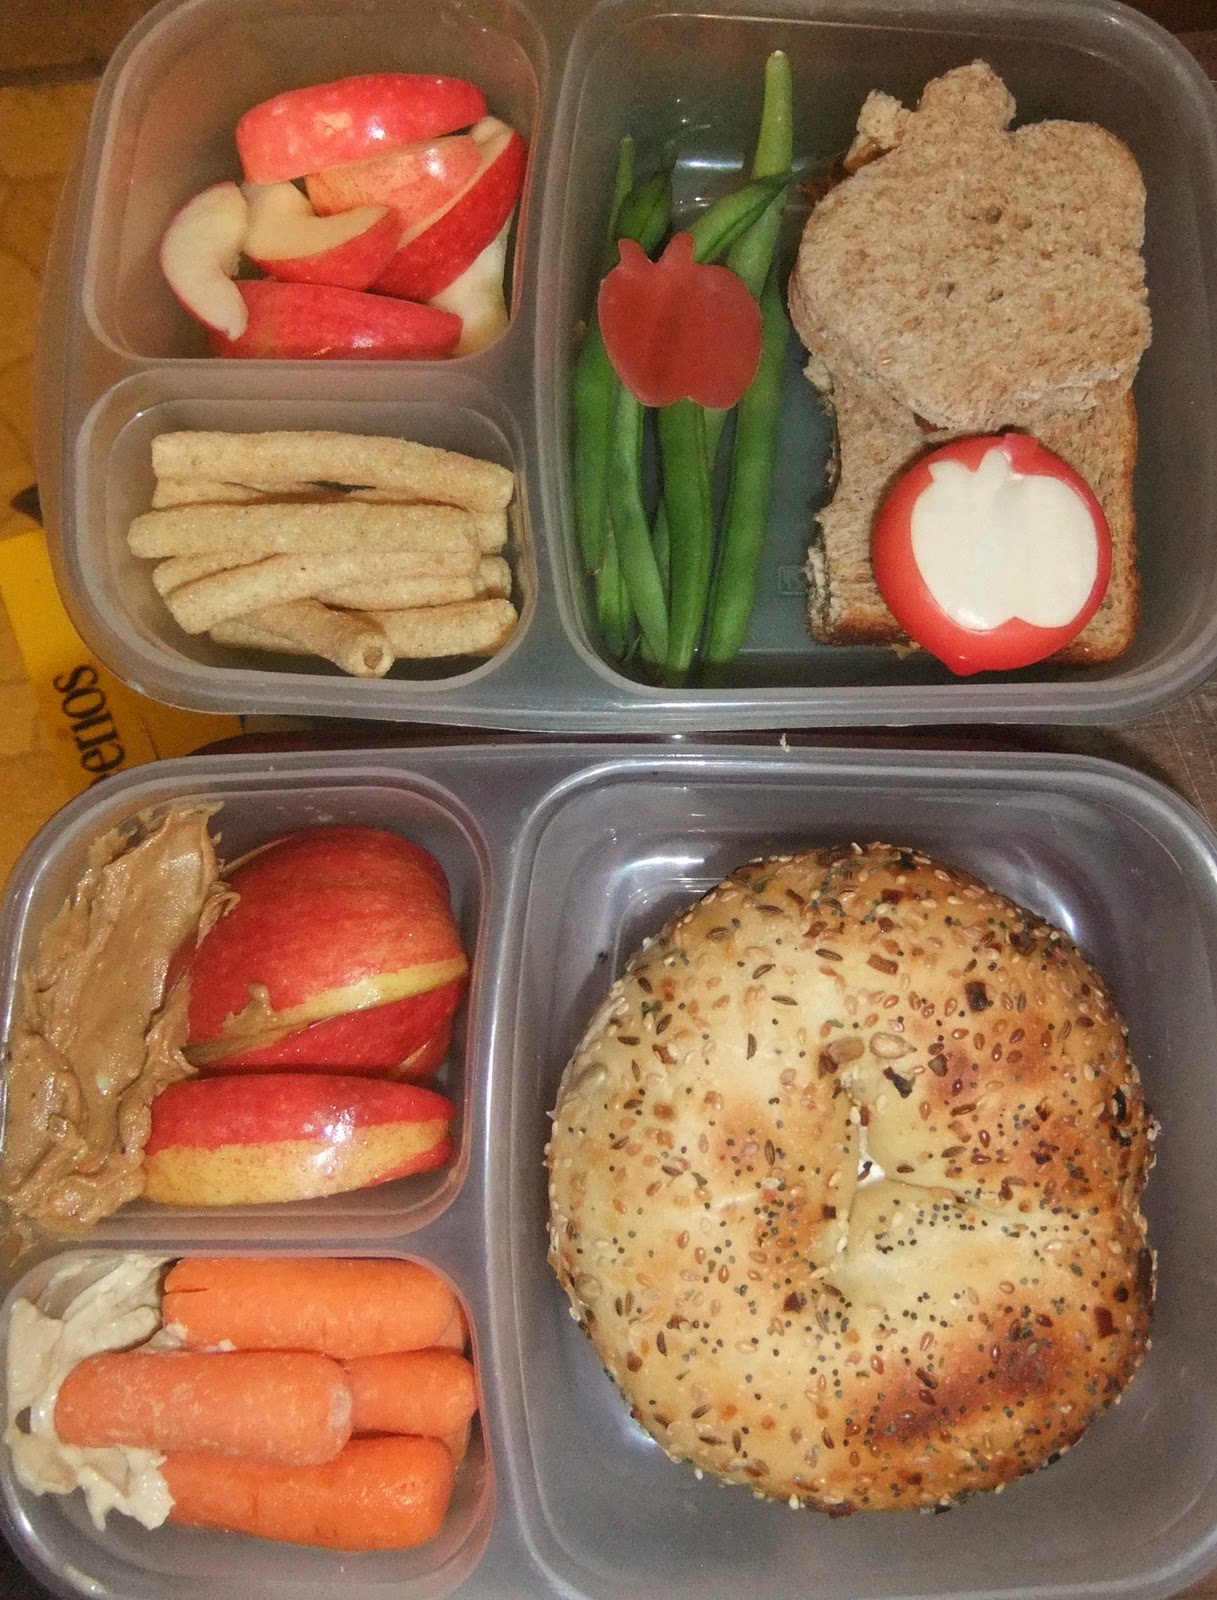 Eco-friendly Lunch Box,easter Wheat Straw Beige Bento Box